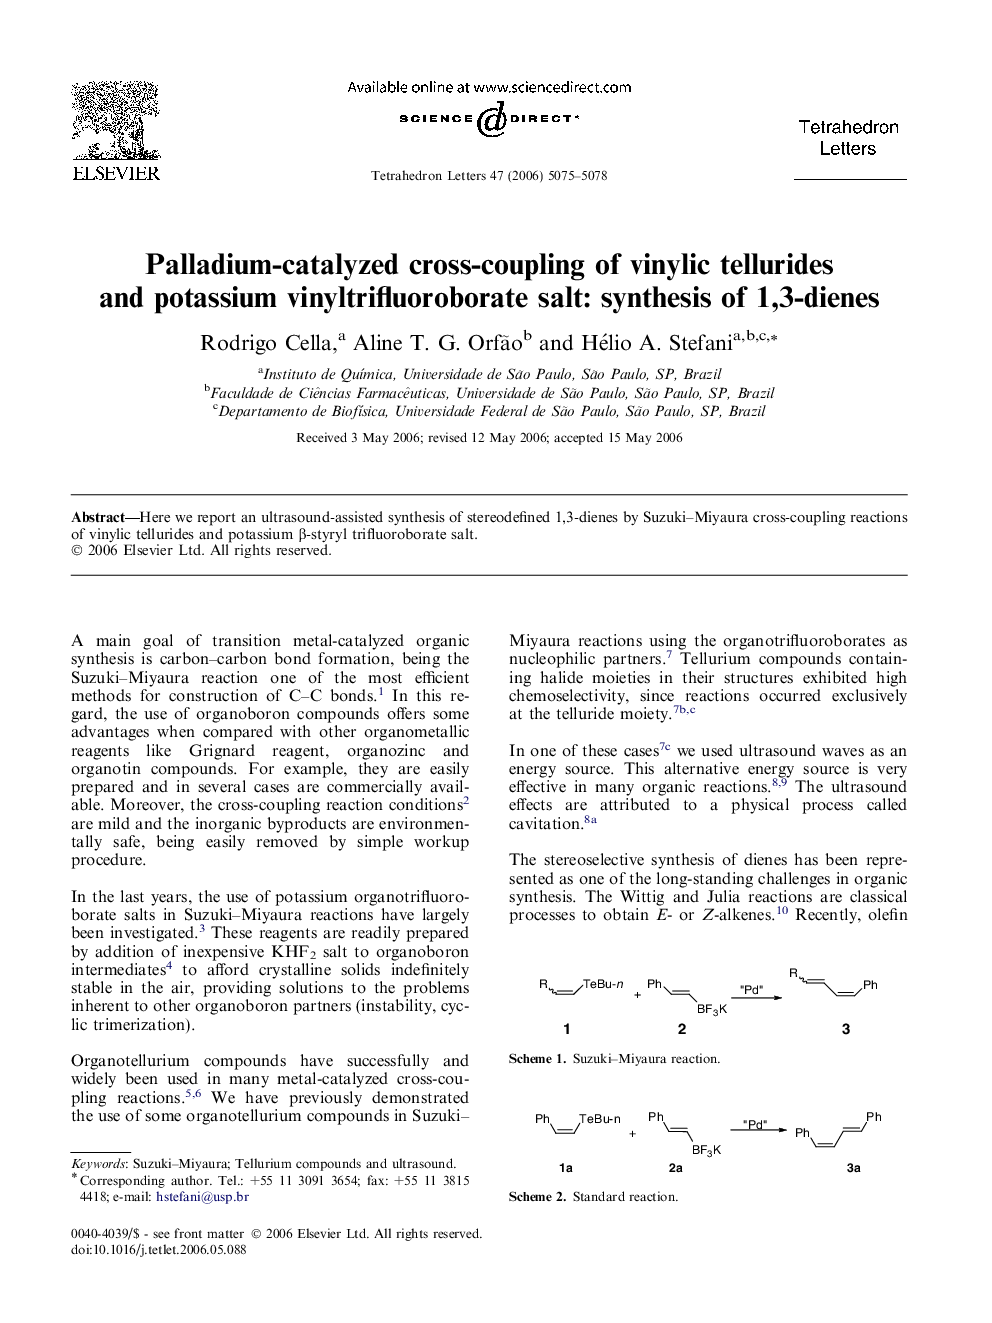 Palladium-catalyzed cross-coupling of vinylic tellurides and potassium vinyltrifluoroborate salt: synthesis of 1,3-dienes